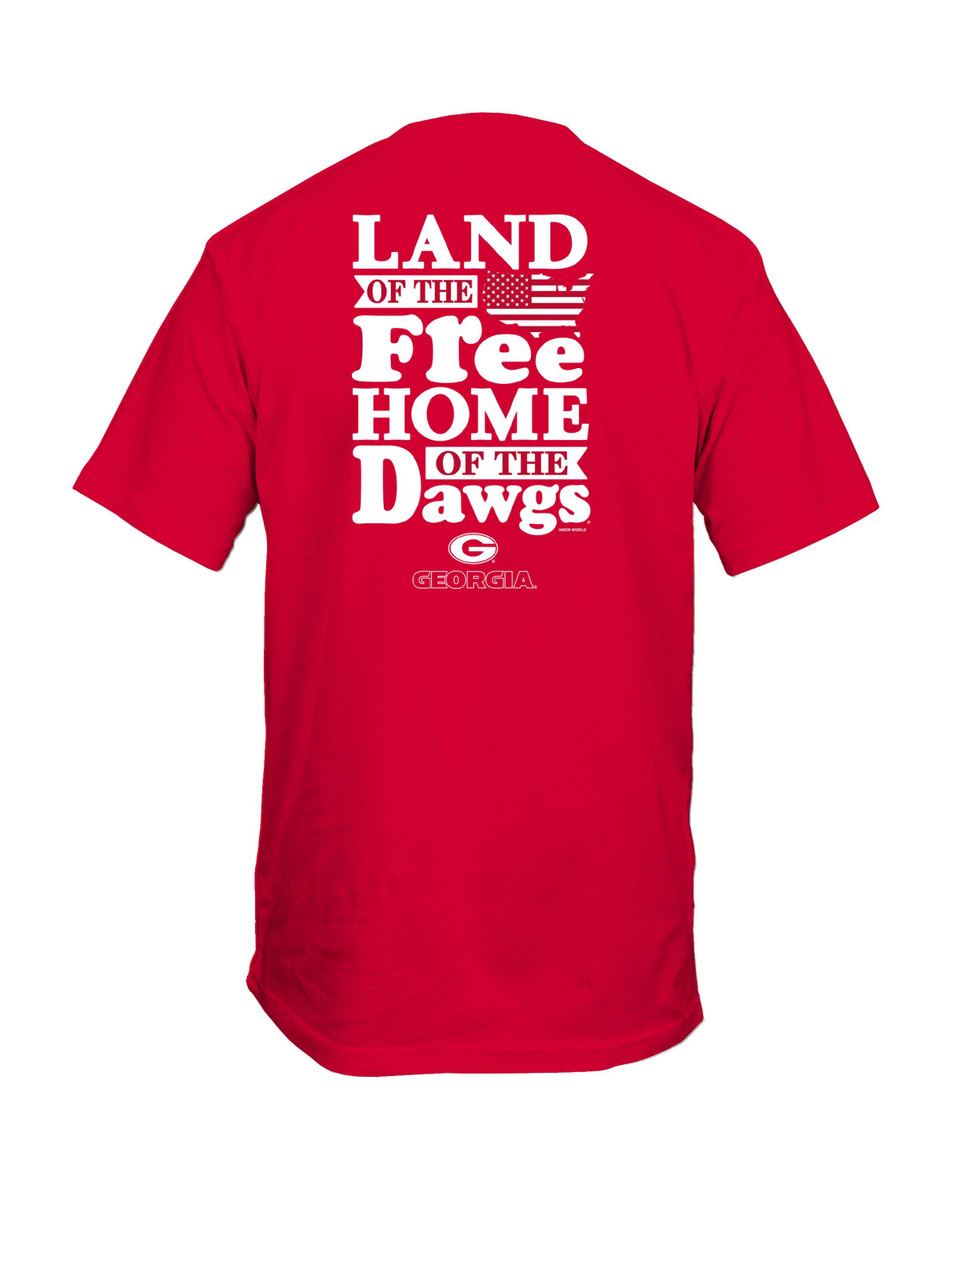 Buy uga national championship Georgia bulldogs Shirt For Free